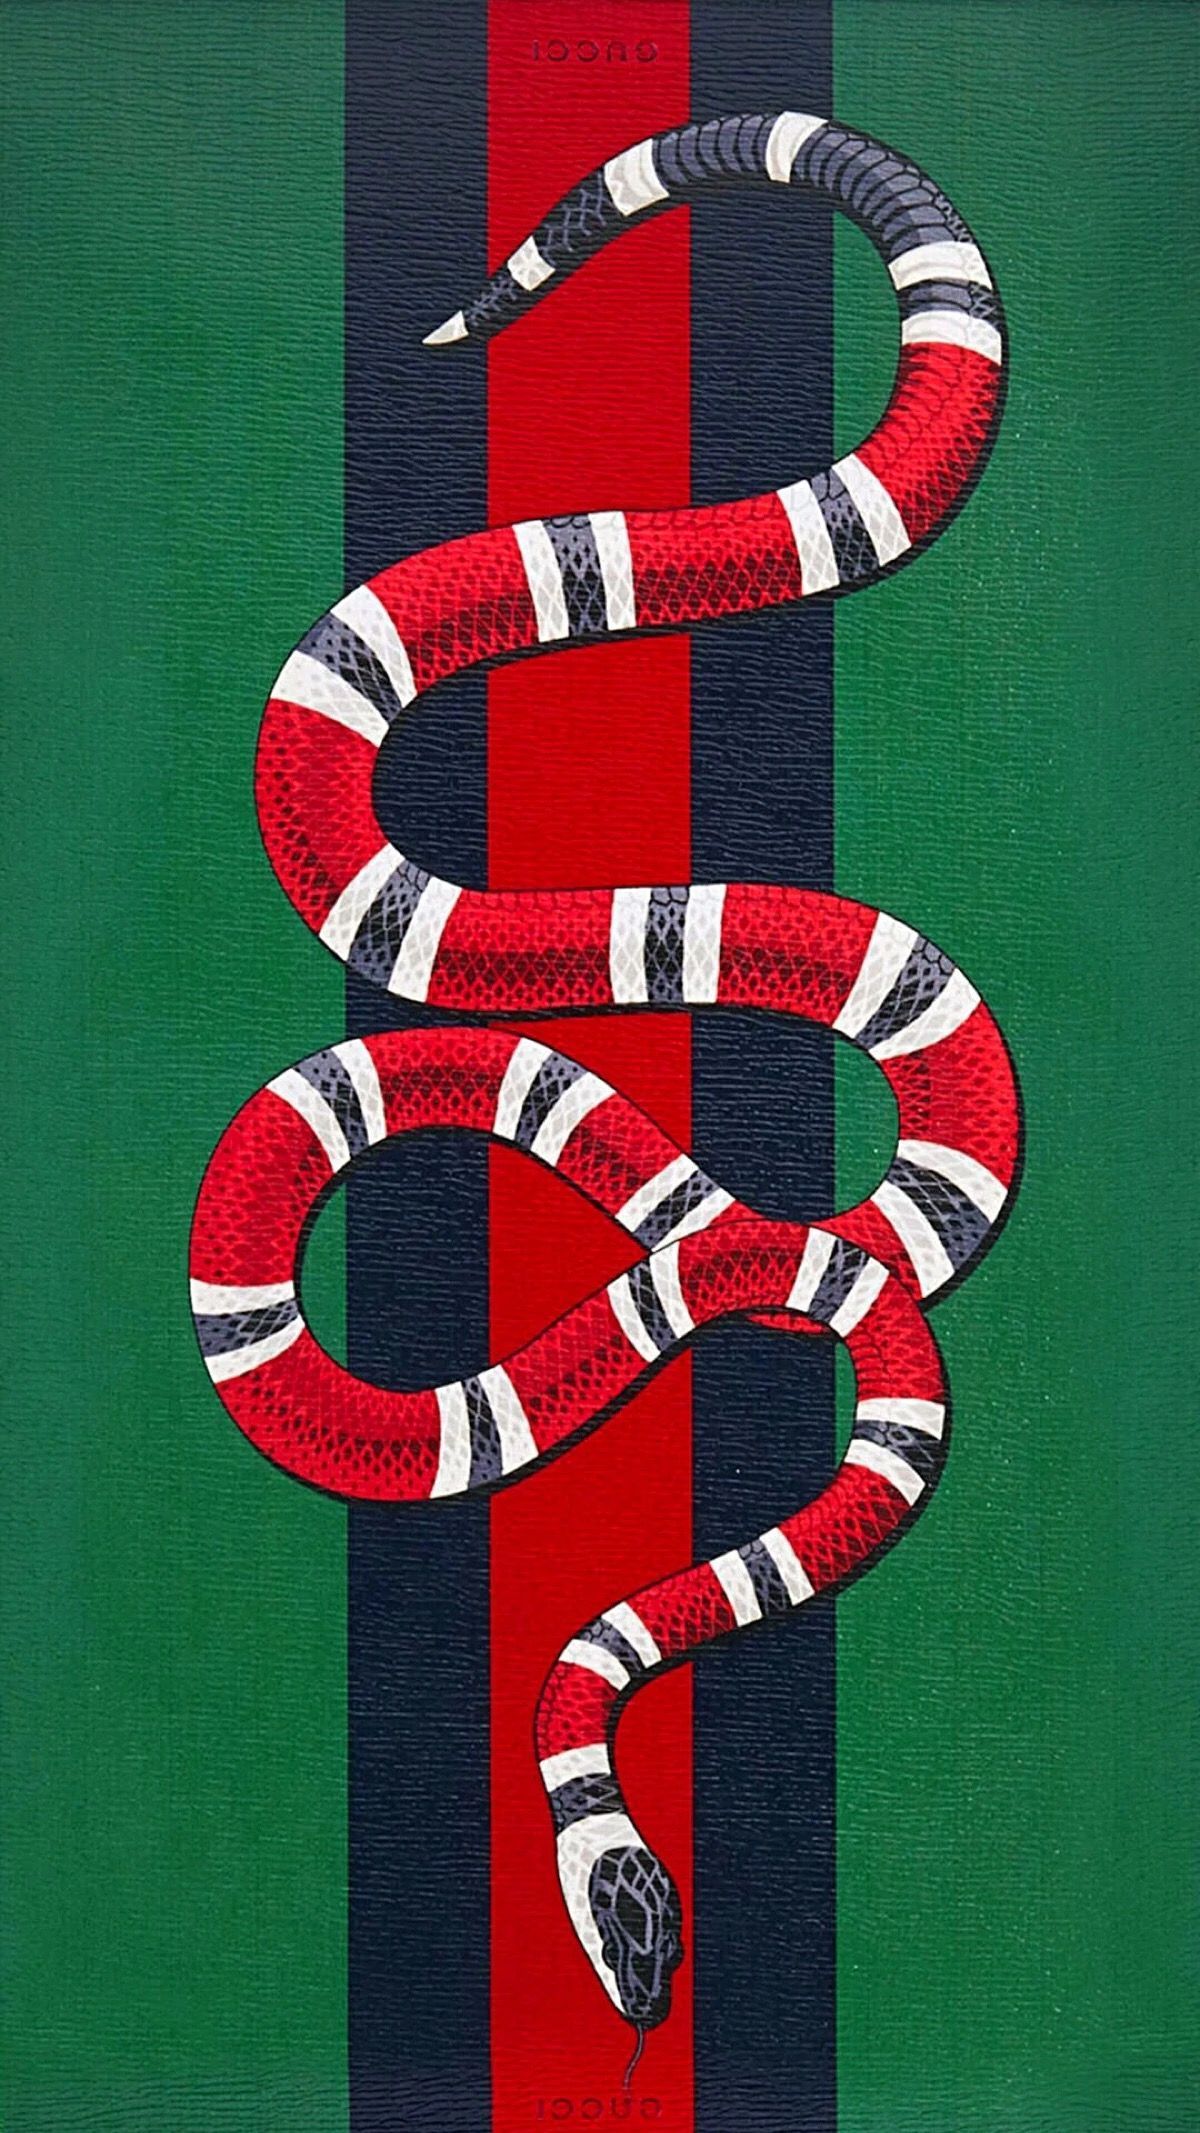 Gucci Logo Snake Wallpapers